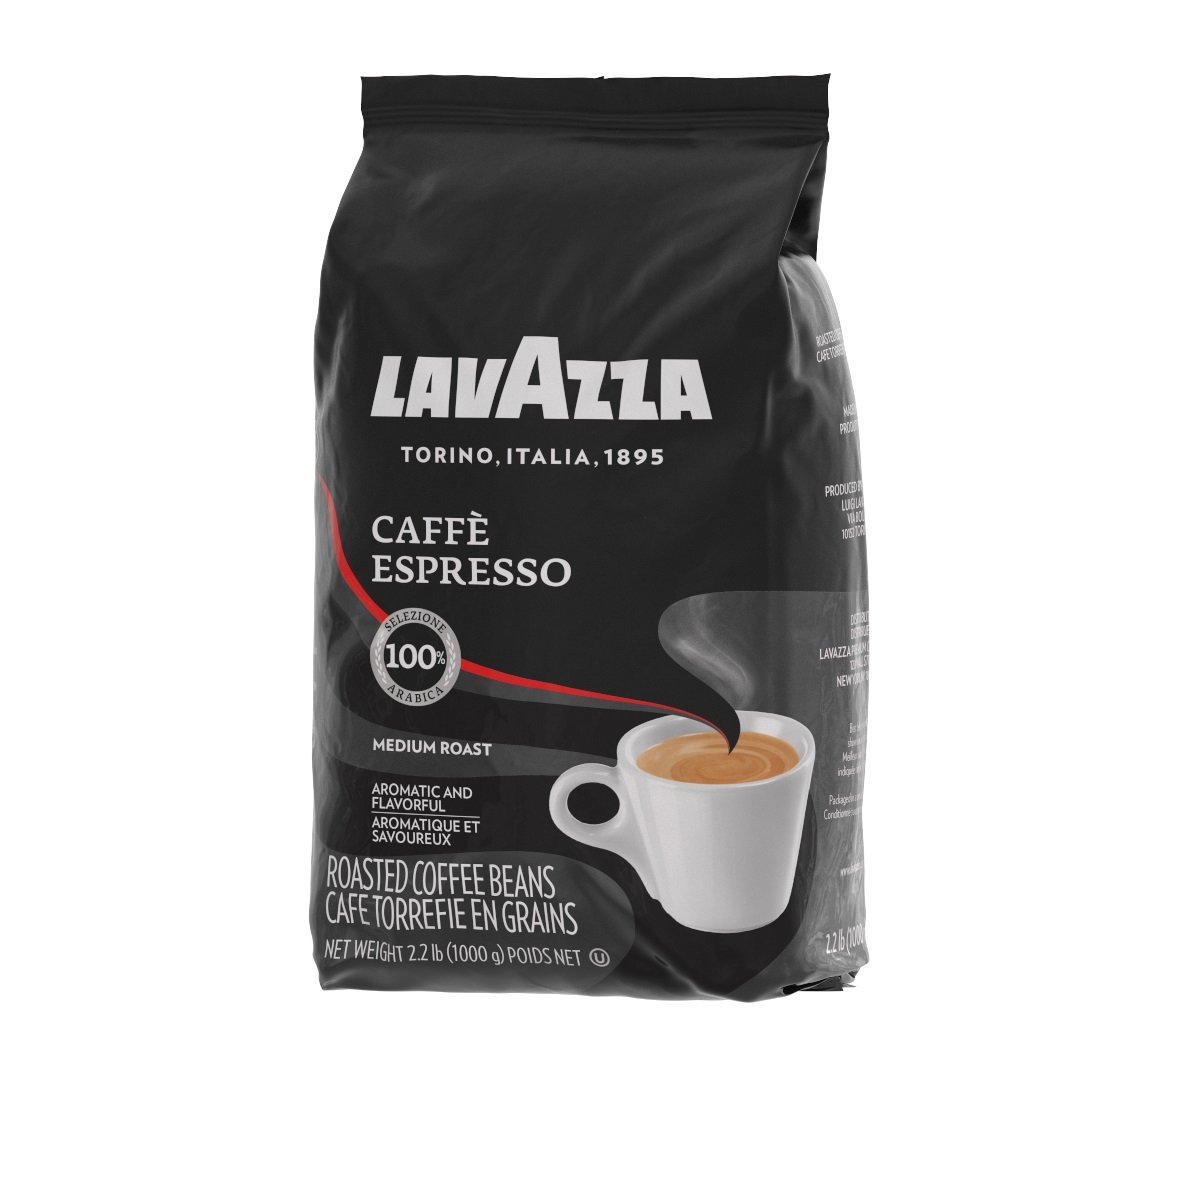 Lavazza Espresso Blend. Кофе Lavazza Espresso. Lavazza Coffee Beans Espresso. Lavazza Classico Medium Roast кофе молотый.